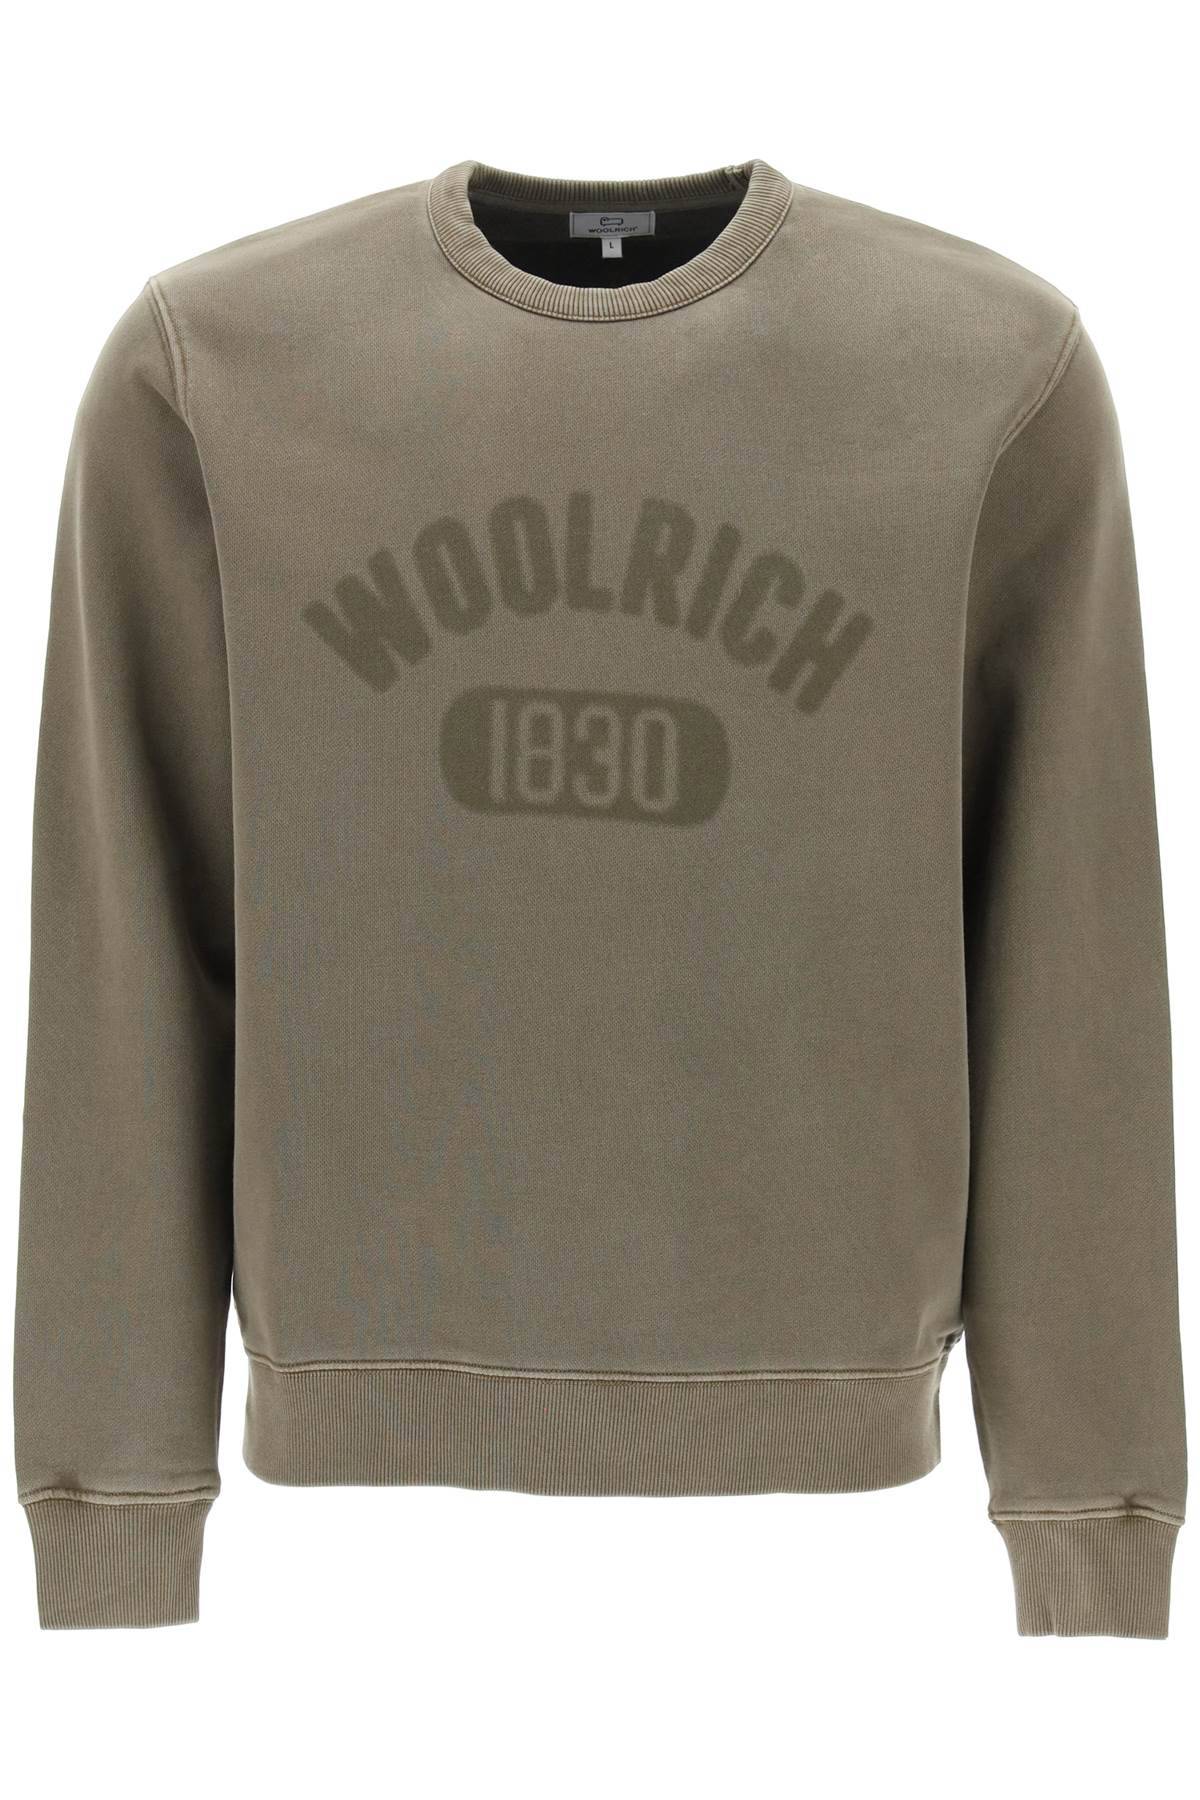 Woolrich WOOLRICH vintage logo sweatshirt with a